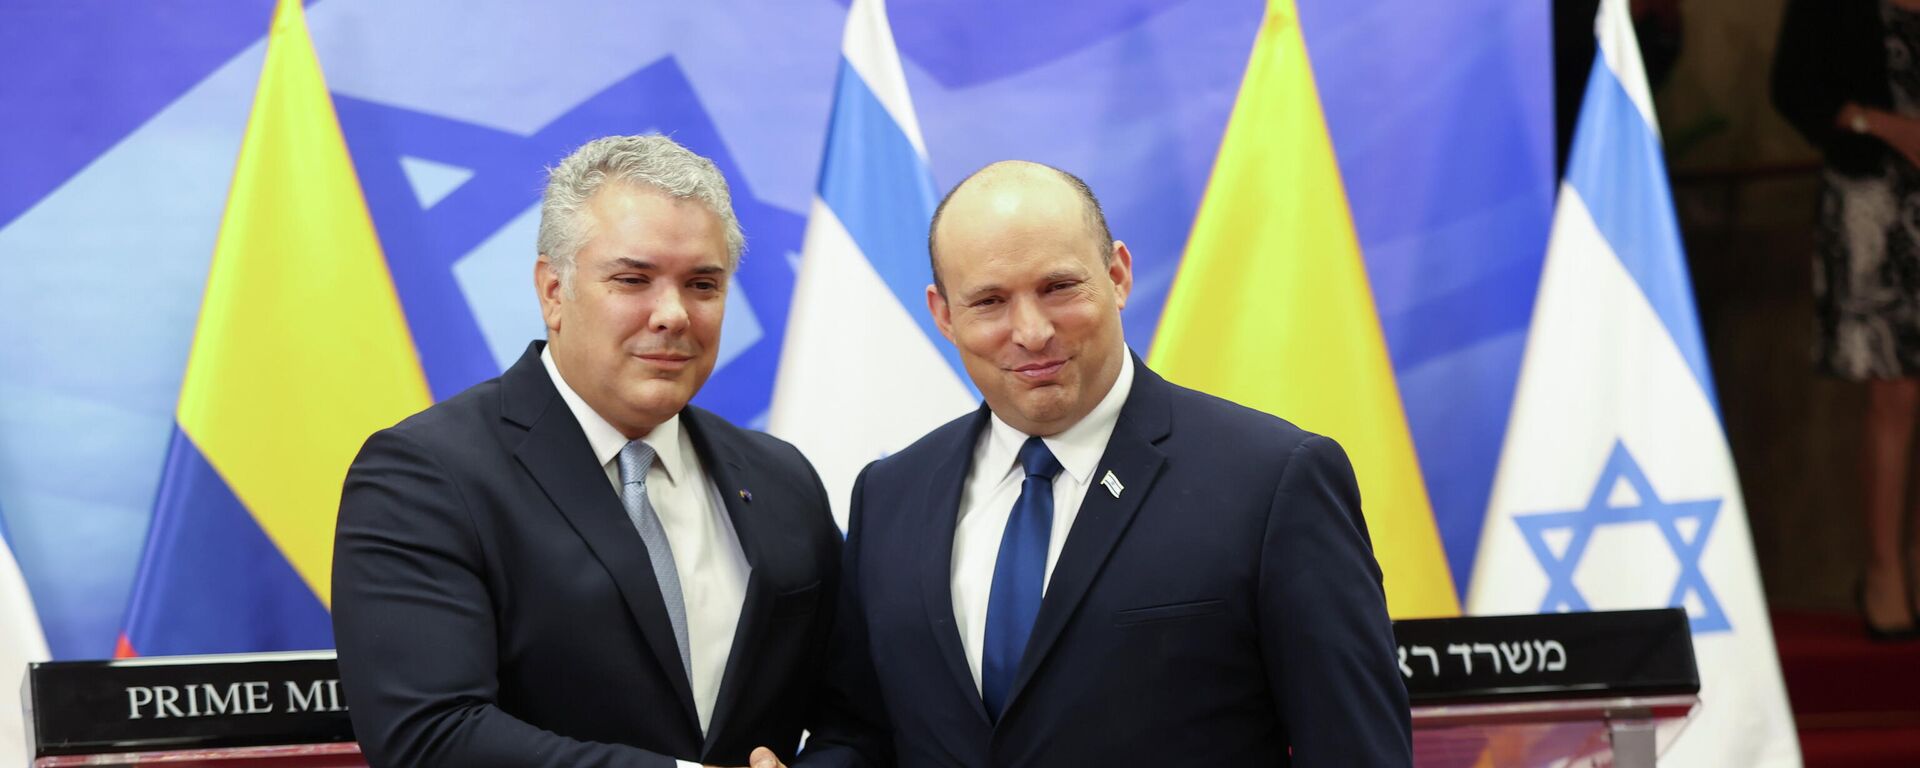 El presidente de Colombia, Iván Duque, junto al primer ministro de Israel, Naftali Bennett  - Sputnik Mundo, 1920, 12.11.2021